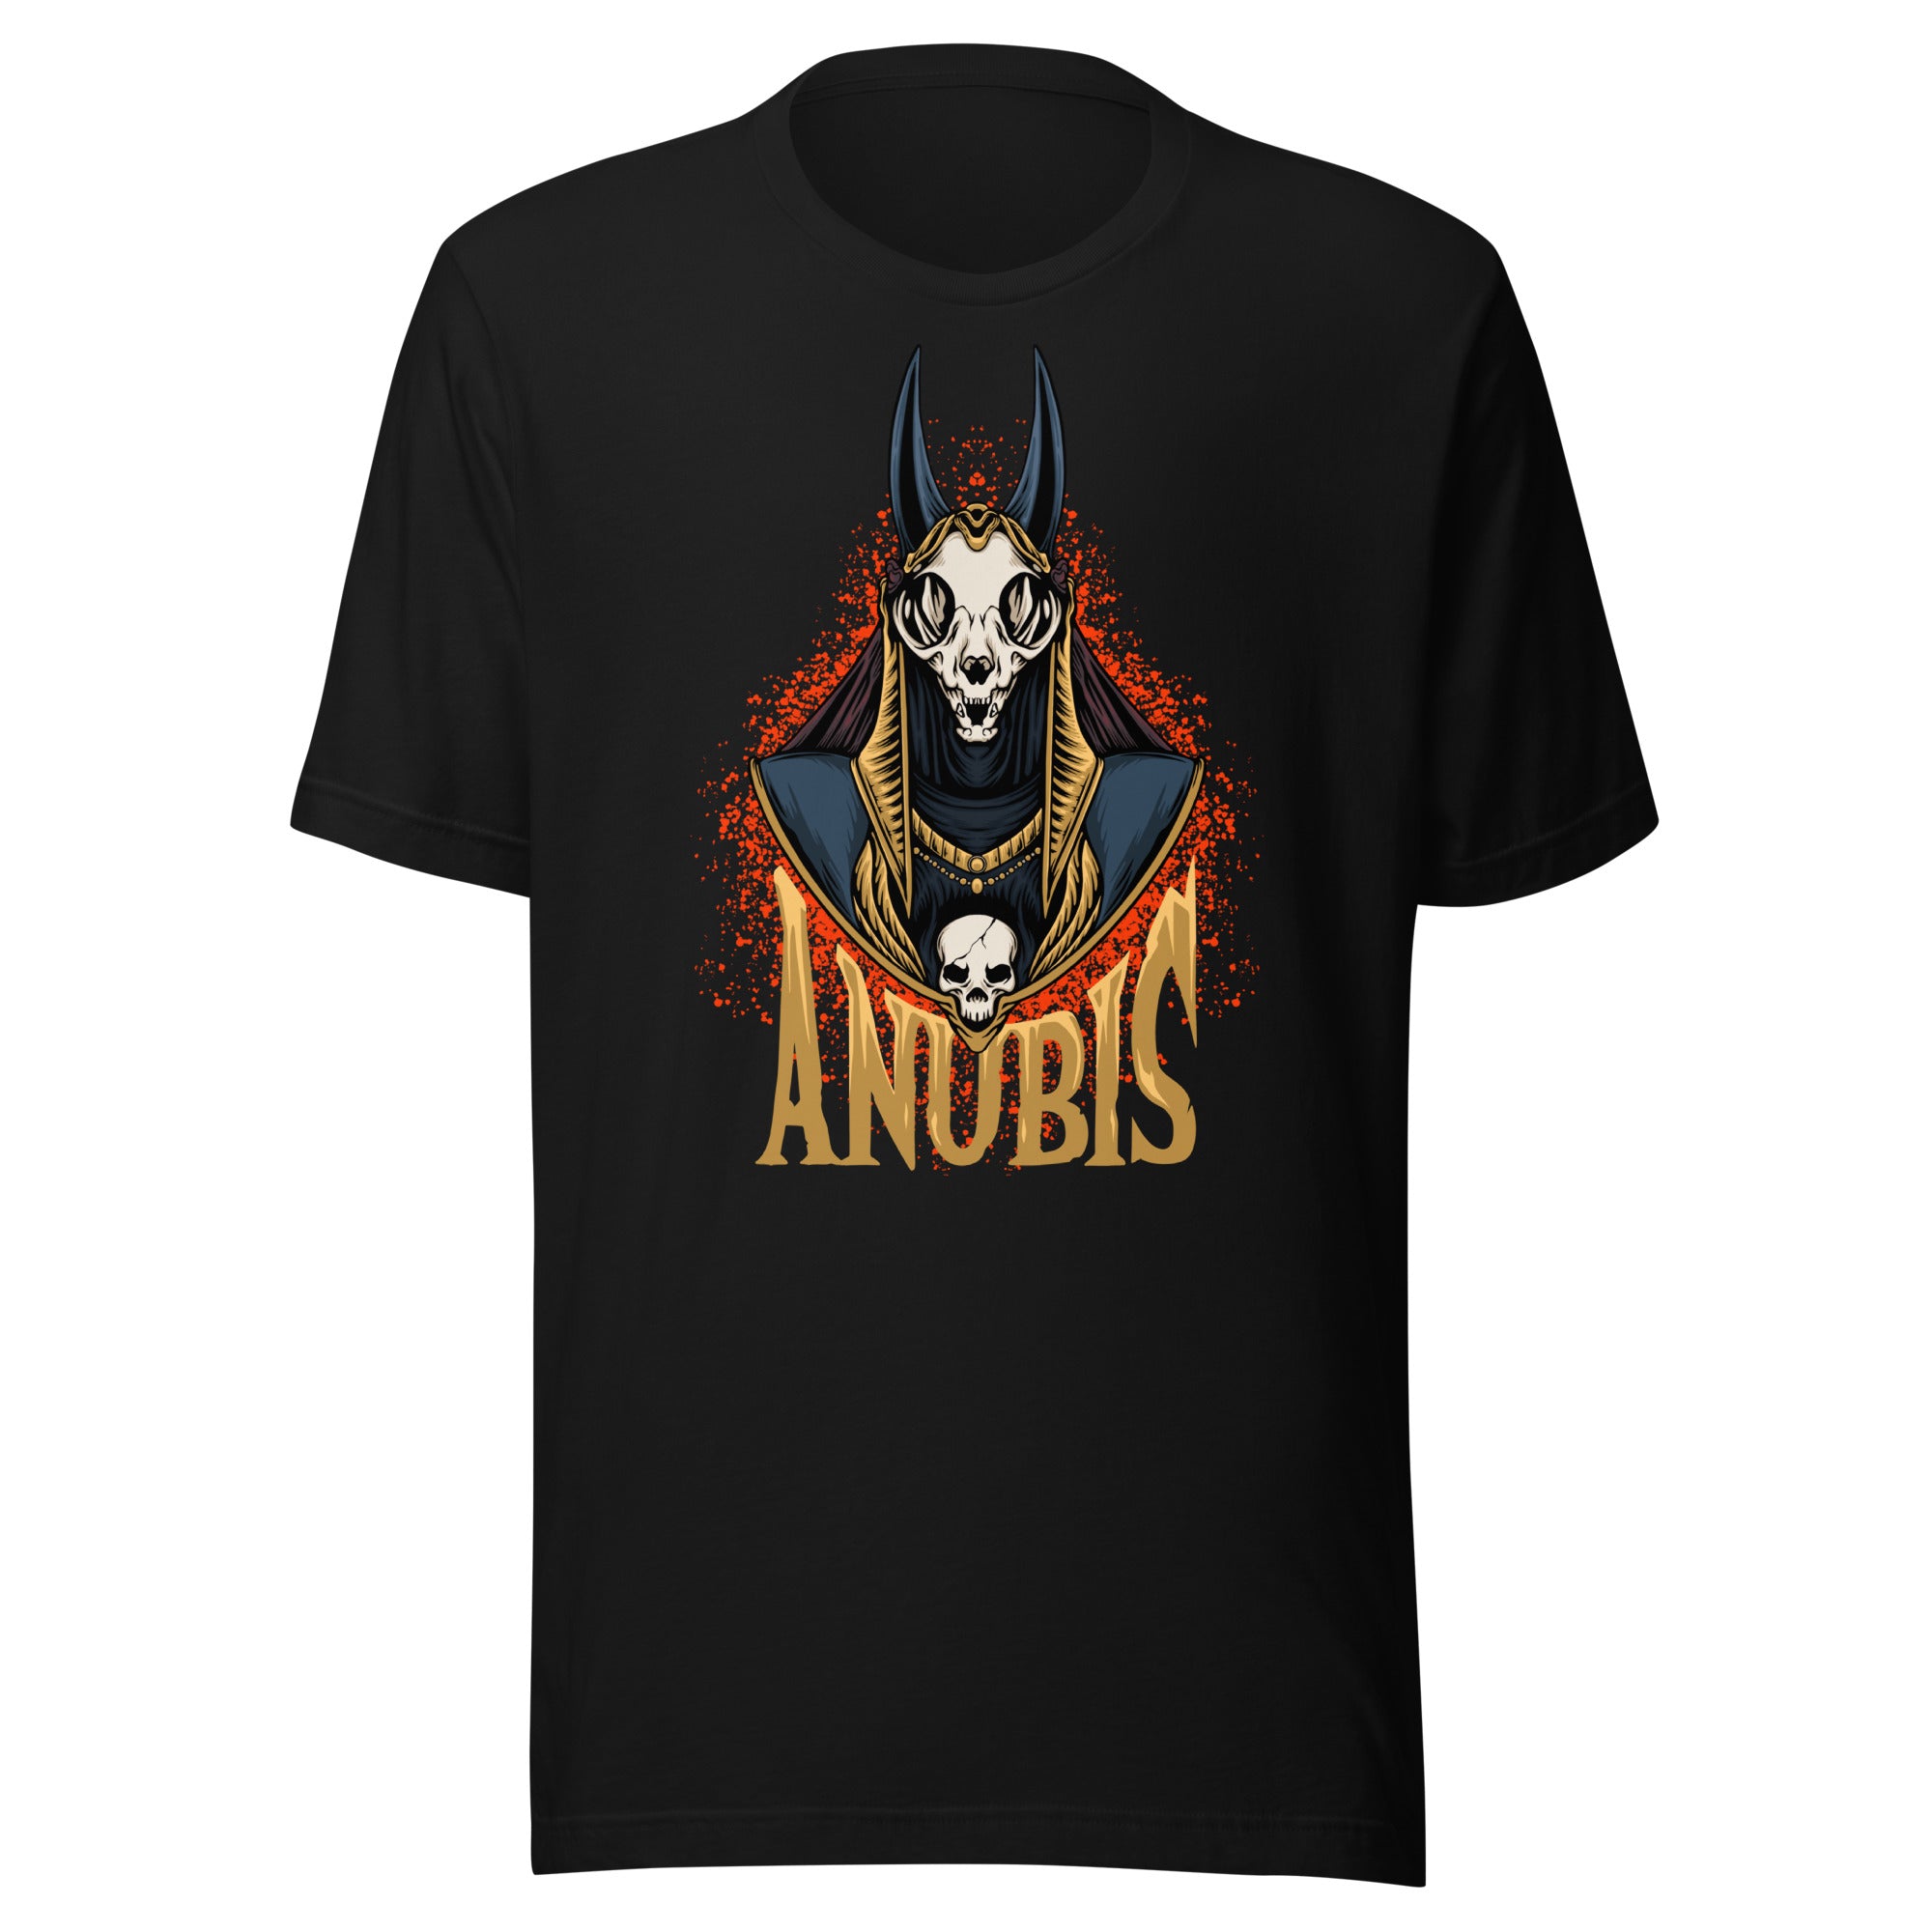 Anubis t-shirt